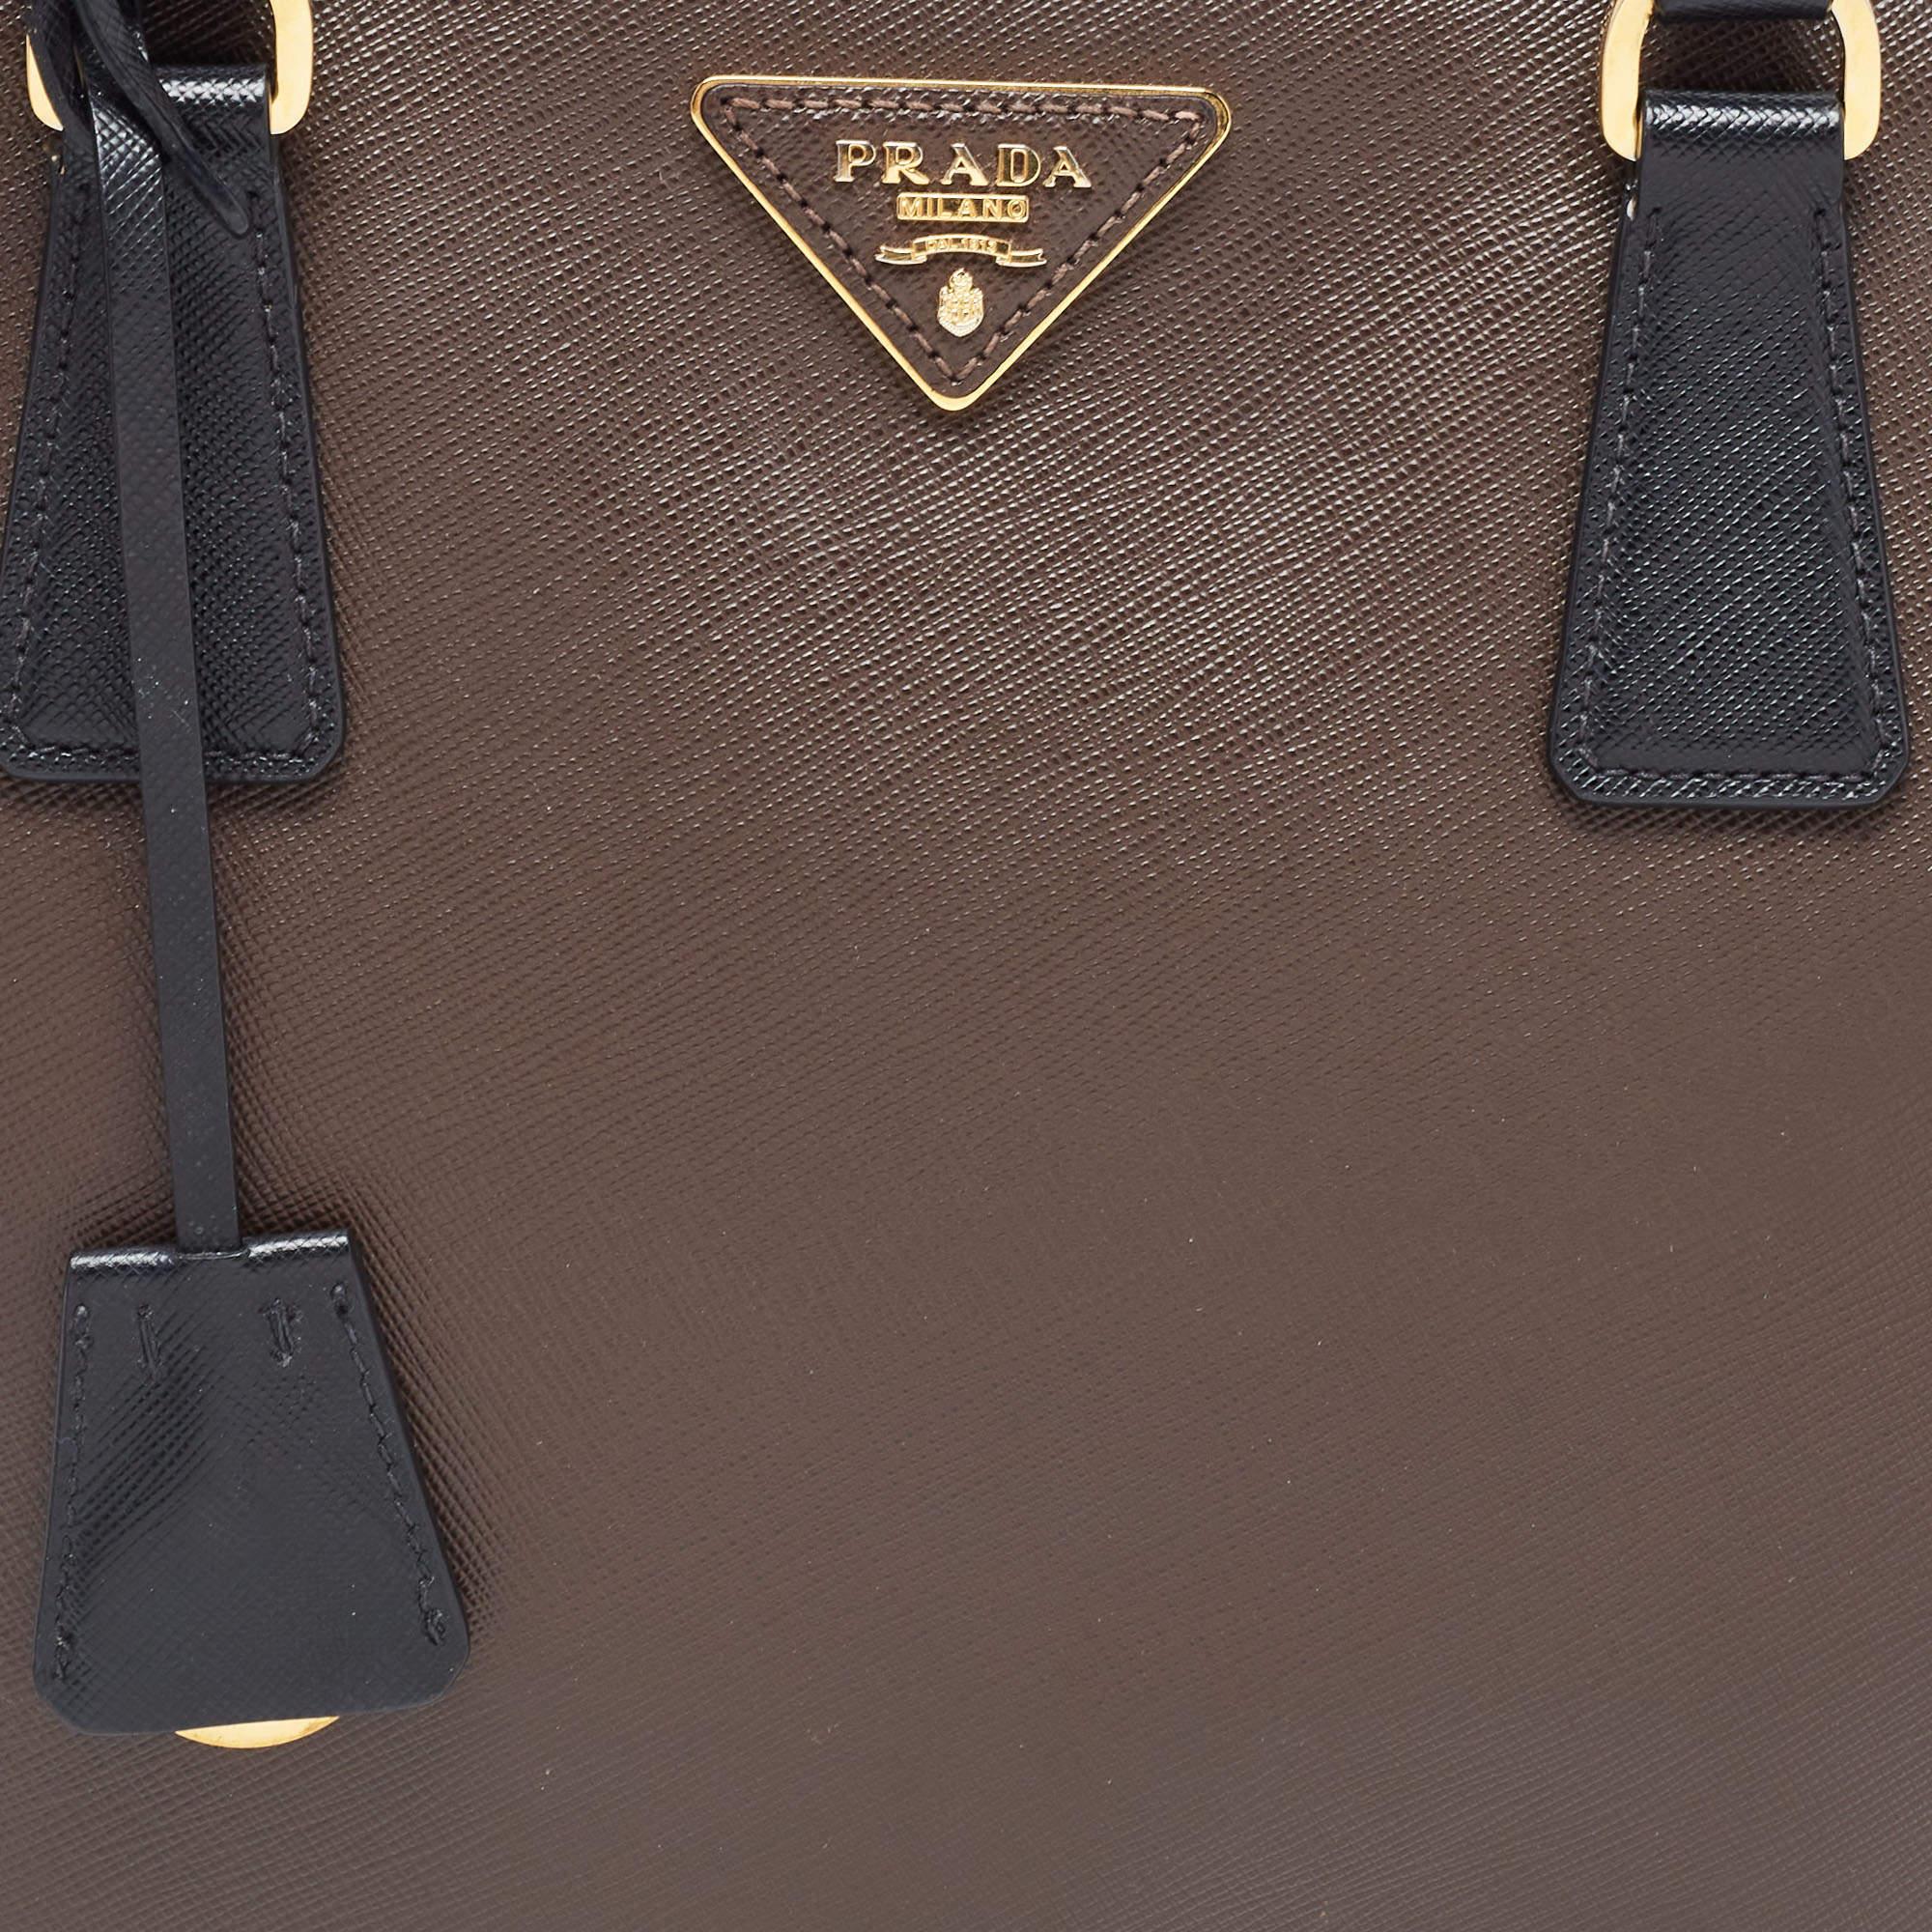 Prada Brown/Black Saffiano Leather Medium Galleria Double Zip Tote 1